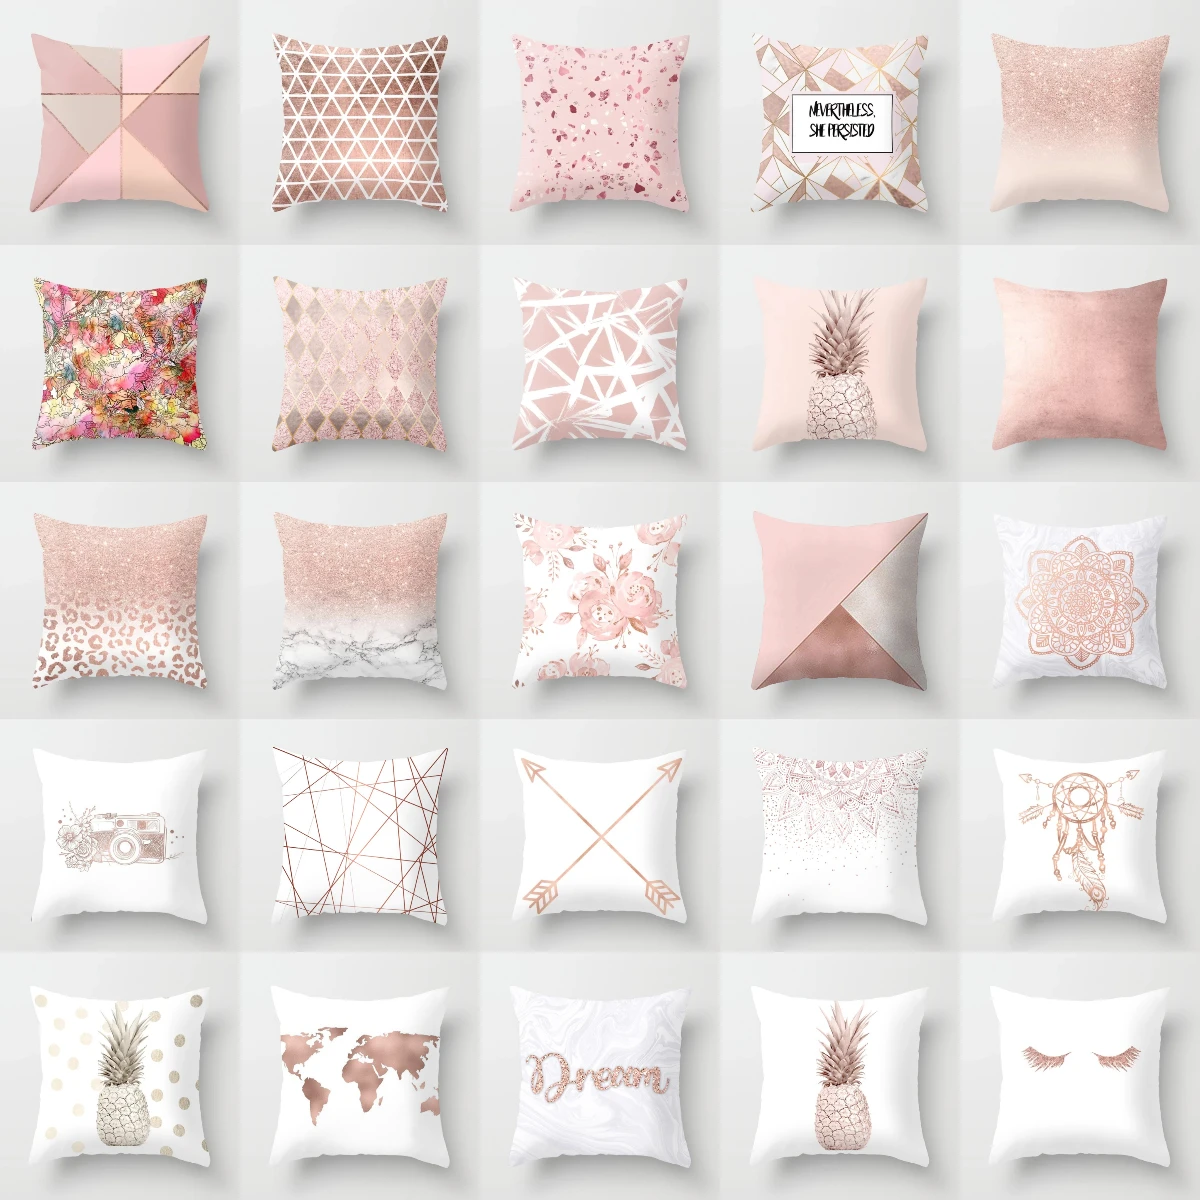 https://ae01.alicdn.com/kf/Hef1799a4ff8c4139806fcfc7e7fbfc775/40X40-45X45CM-Rose-Gold-Pink-Geometry-Print-Cushion-Covers-Modern-Nordic-Livingroom-Decorative-Pillows-Case-Couch.jpg